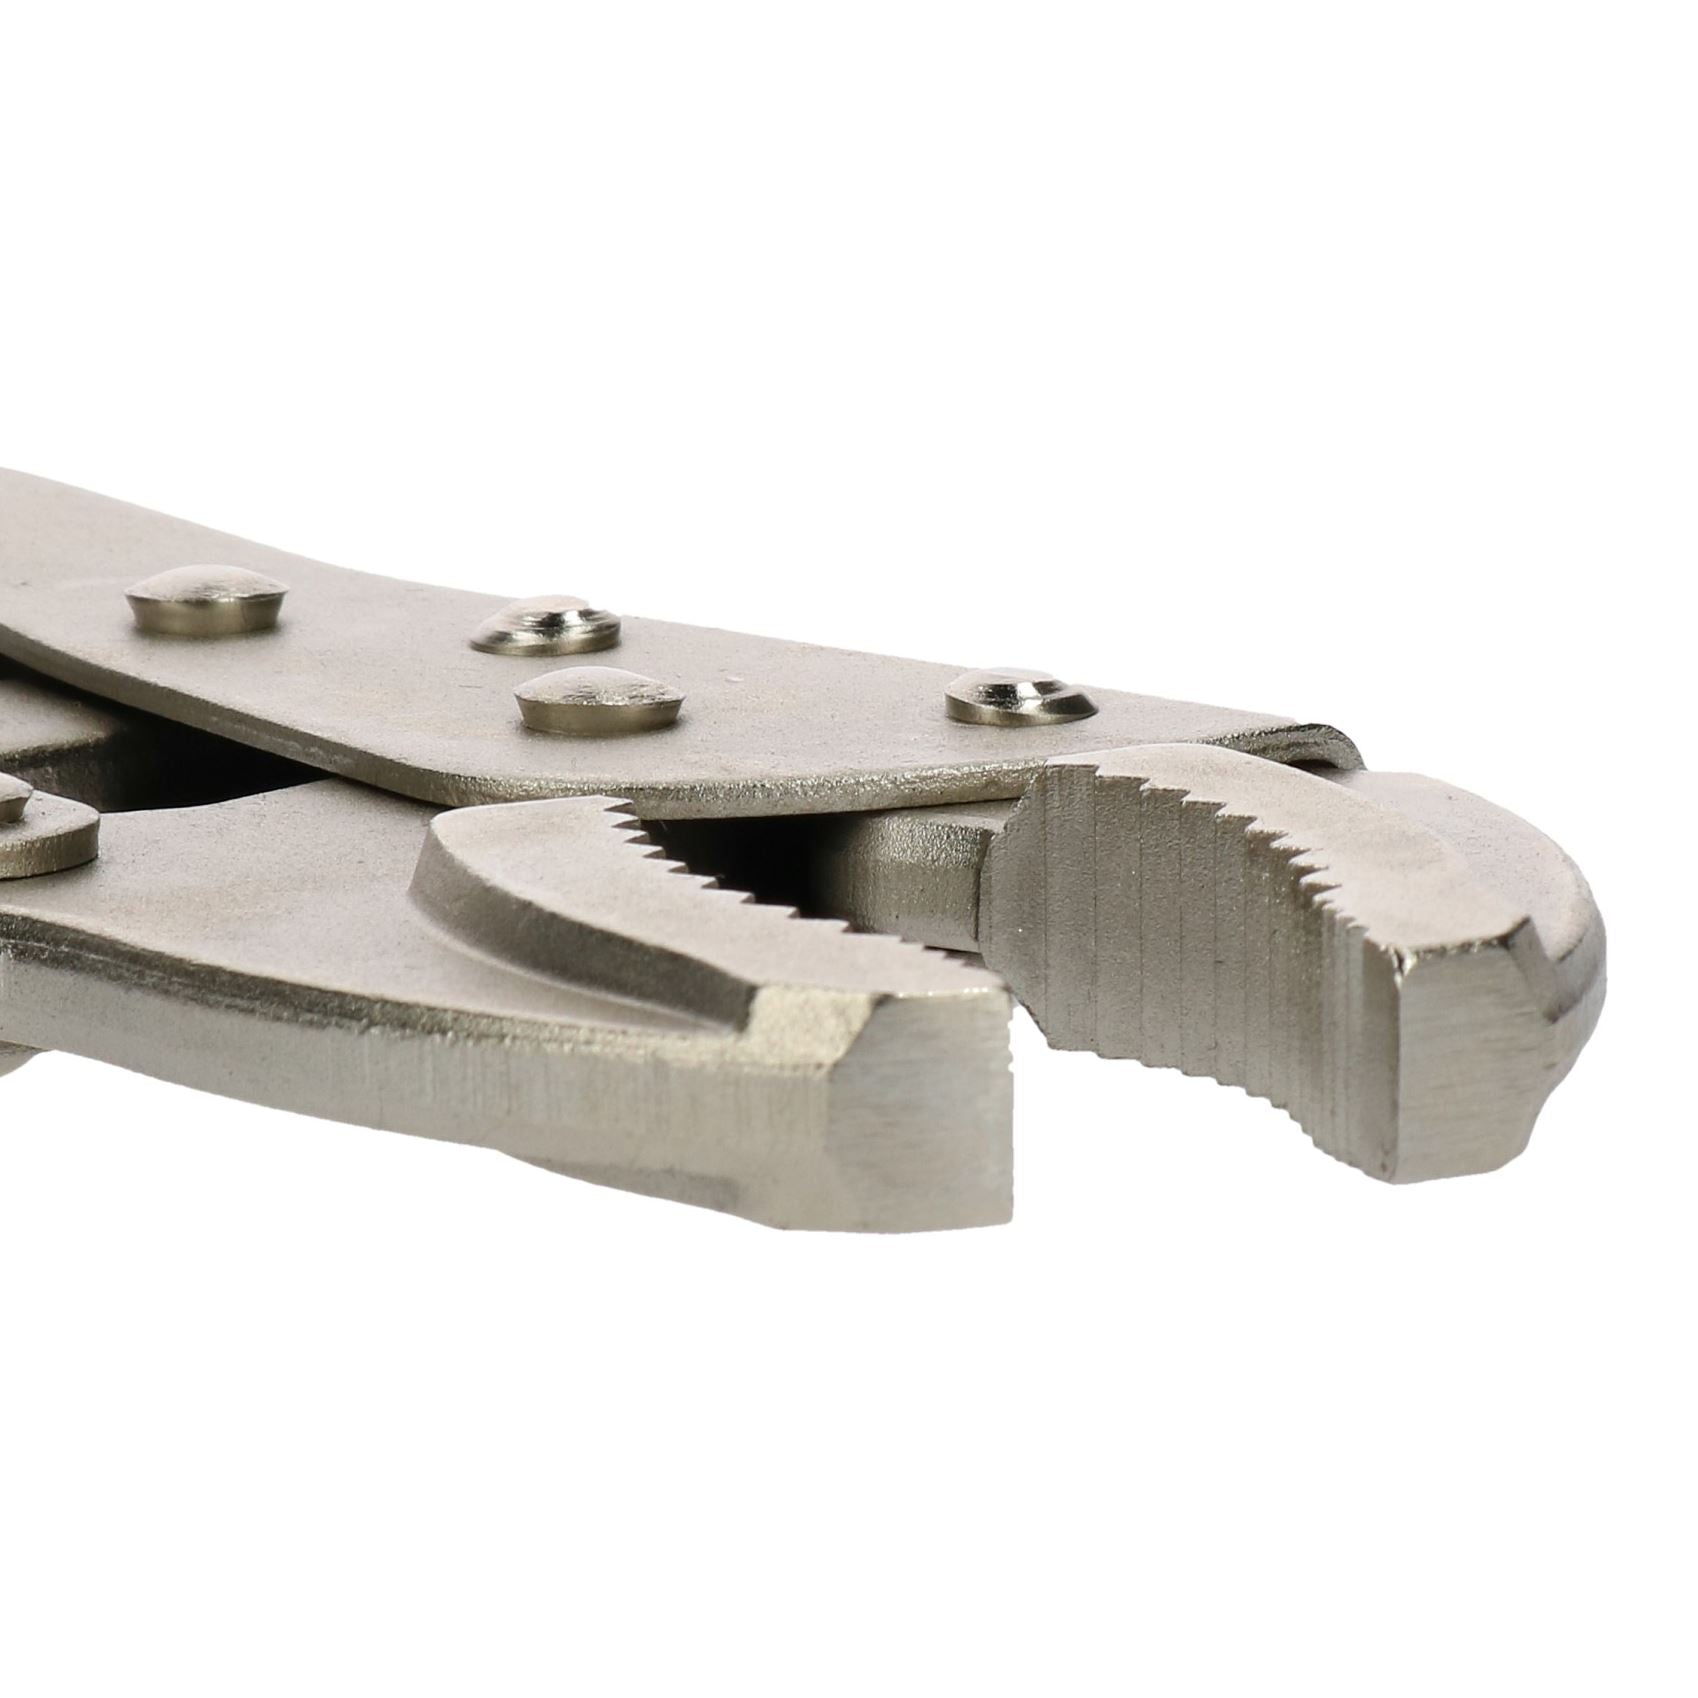 12" Jumbo Locking Pliers Adjustable Mole Vise / Vice Grips Welding Wrench